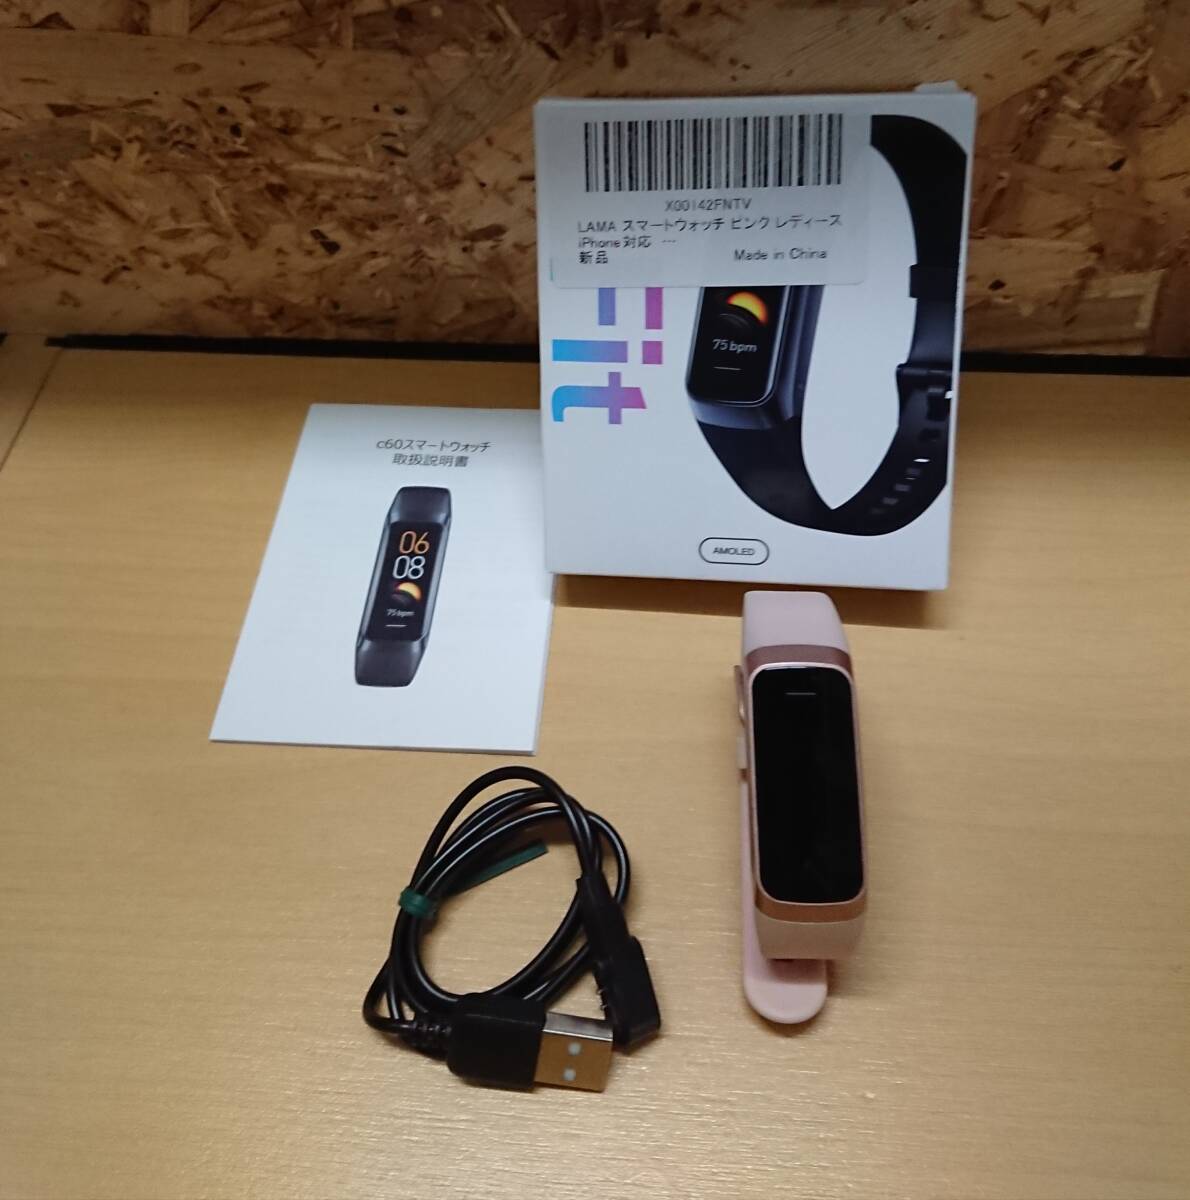 LAMA スマートウォッチ ピンク レディース iPhone対応 smart watch 歩数計 ストップウォッチ 酸素濃度 心拍数 運動記録 _画像7